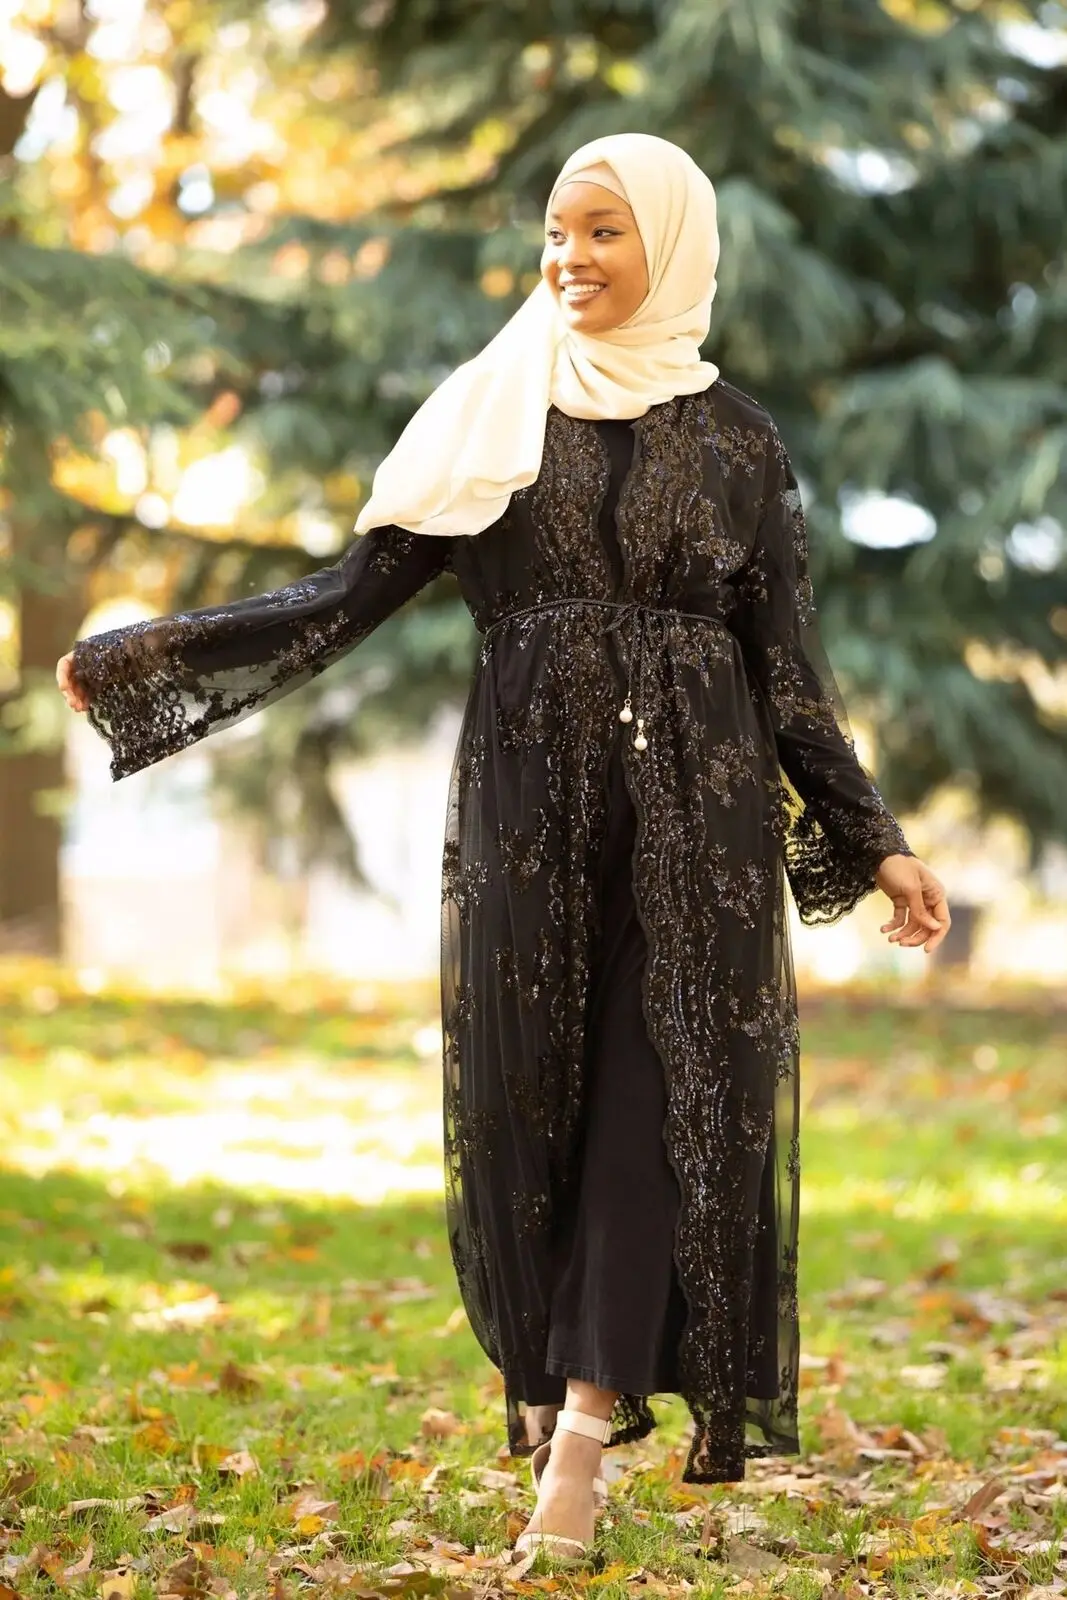 Dubai Style Women Open Front Kaftan Abaya Muslim Cardigan Robe Maxi Dress